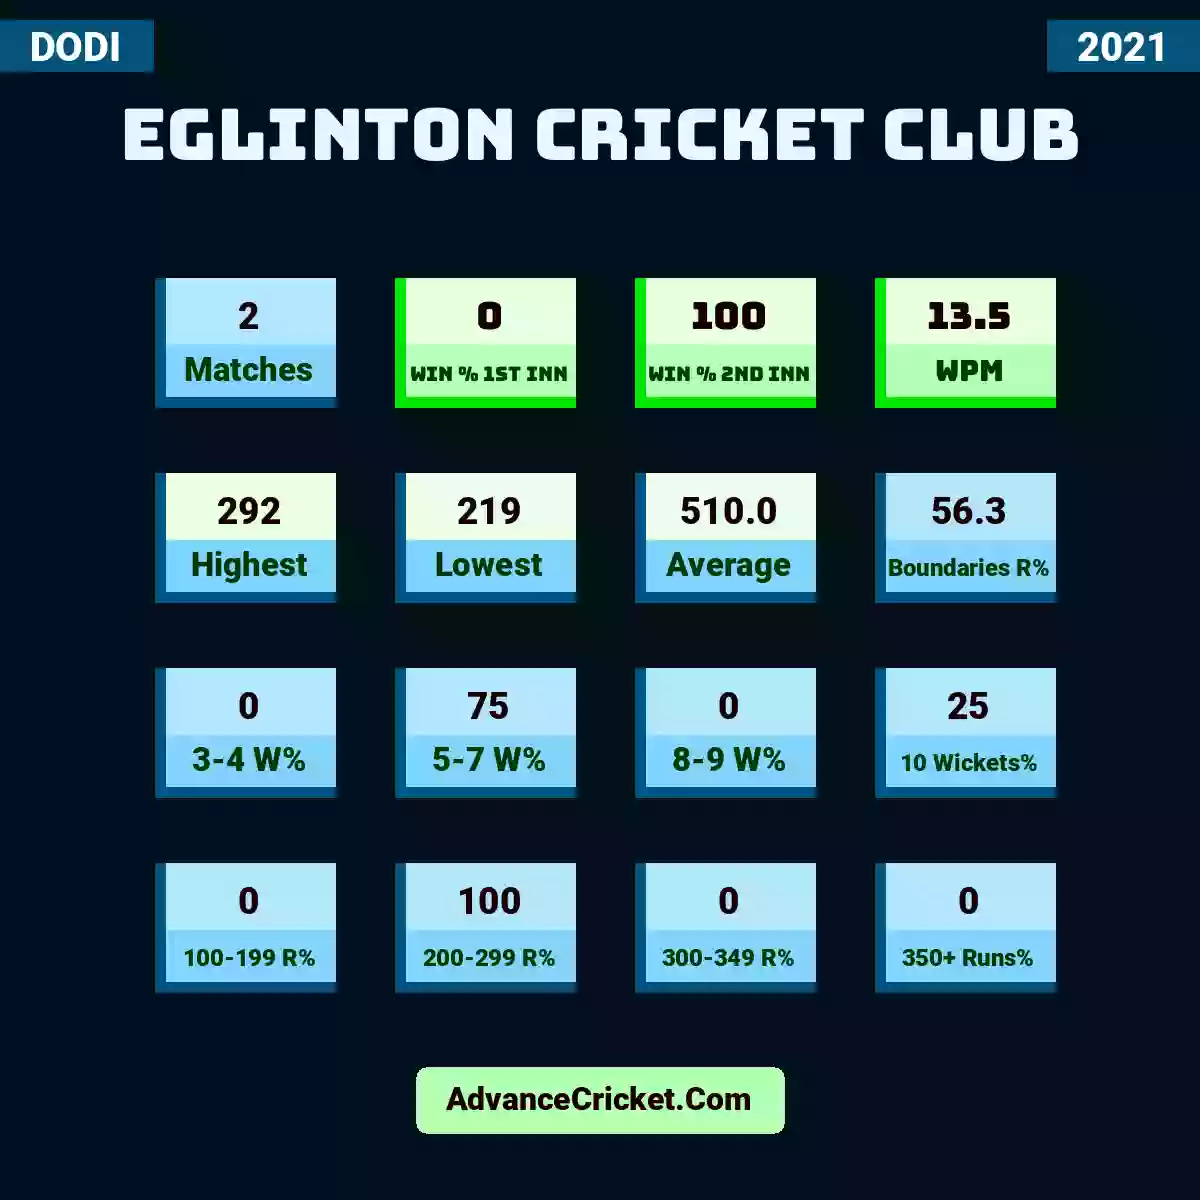 Image showing Eglinton Cricket Club with Matches: 2, Win % 1st Inn: 0, Win % 2nd Inn: 100, WPM: 13.5, Highest: 292, Lowest: 219, Average: 510.0, Boundaries R%: 56.3, 3-4 W%: 0, 5-7 W%: 75, 8-9 W%: 0, 10 Wickets%: 25, 100-199 R%: 0, 200-299 R%: 100, 300-349 R%: 0, 350+ Runs%: 0.